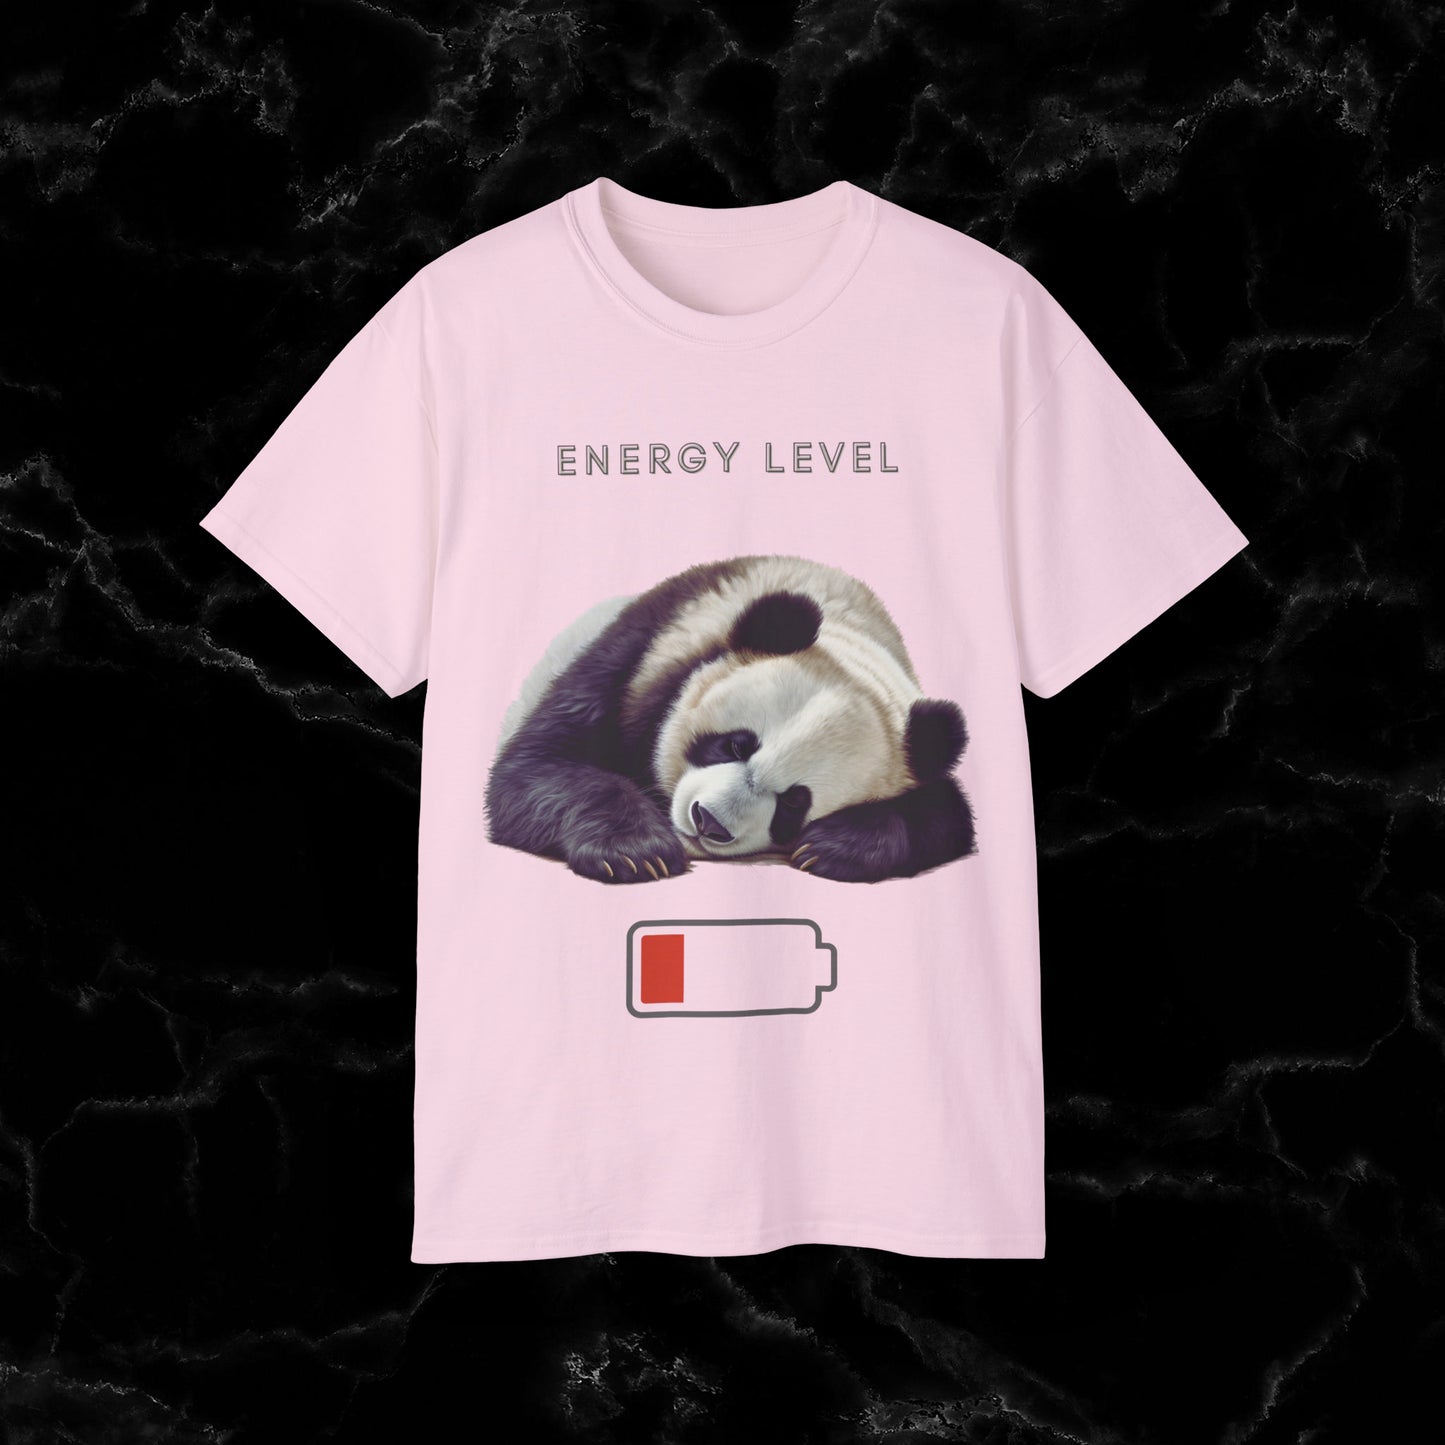 Nap Time Panda Unisex Funny Tee - Hilarious Panda Nap Design - Energy Level T-Shirt Light Pink S 